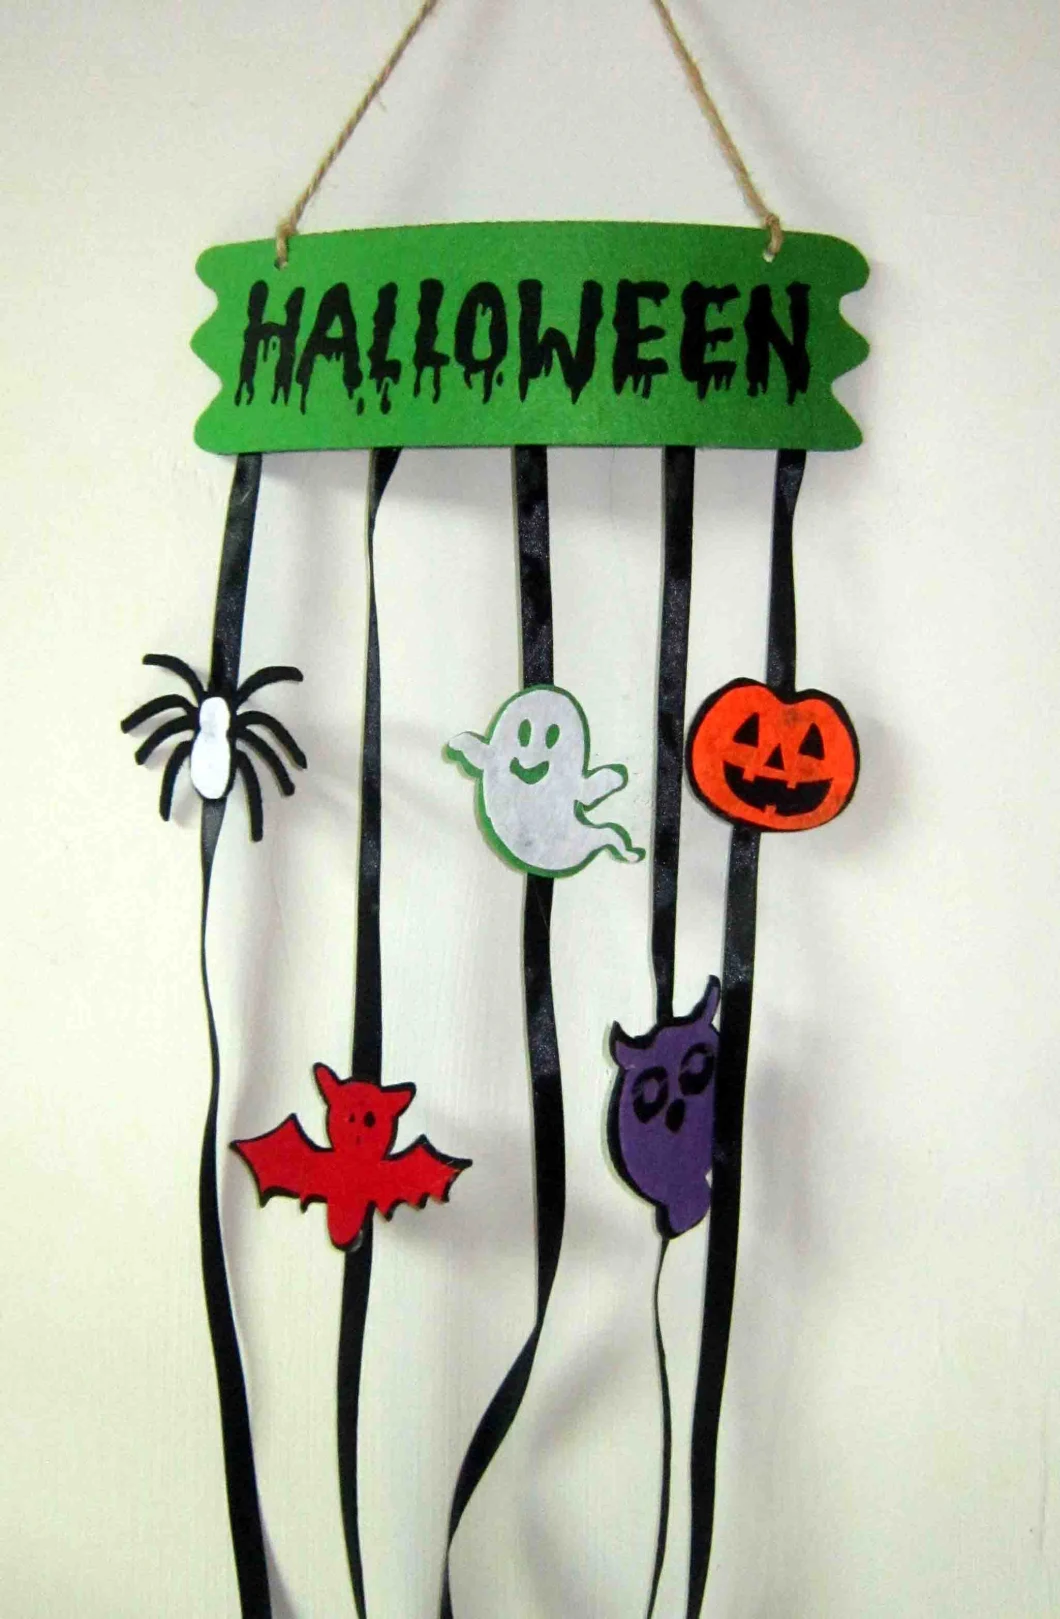 Halloween Party Supplies Halloween Party Decoration Halloween Decor Hanger